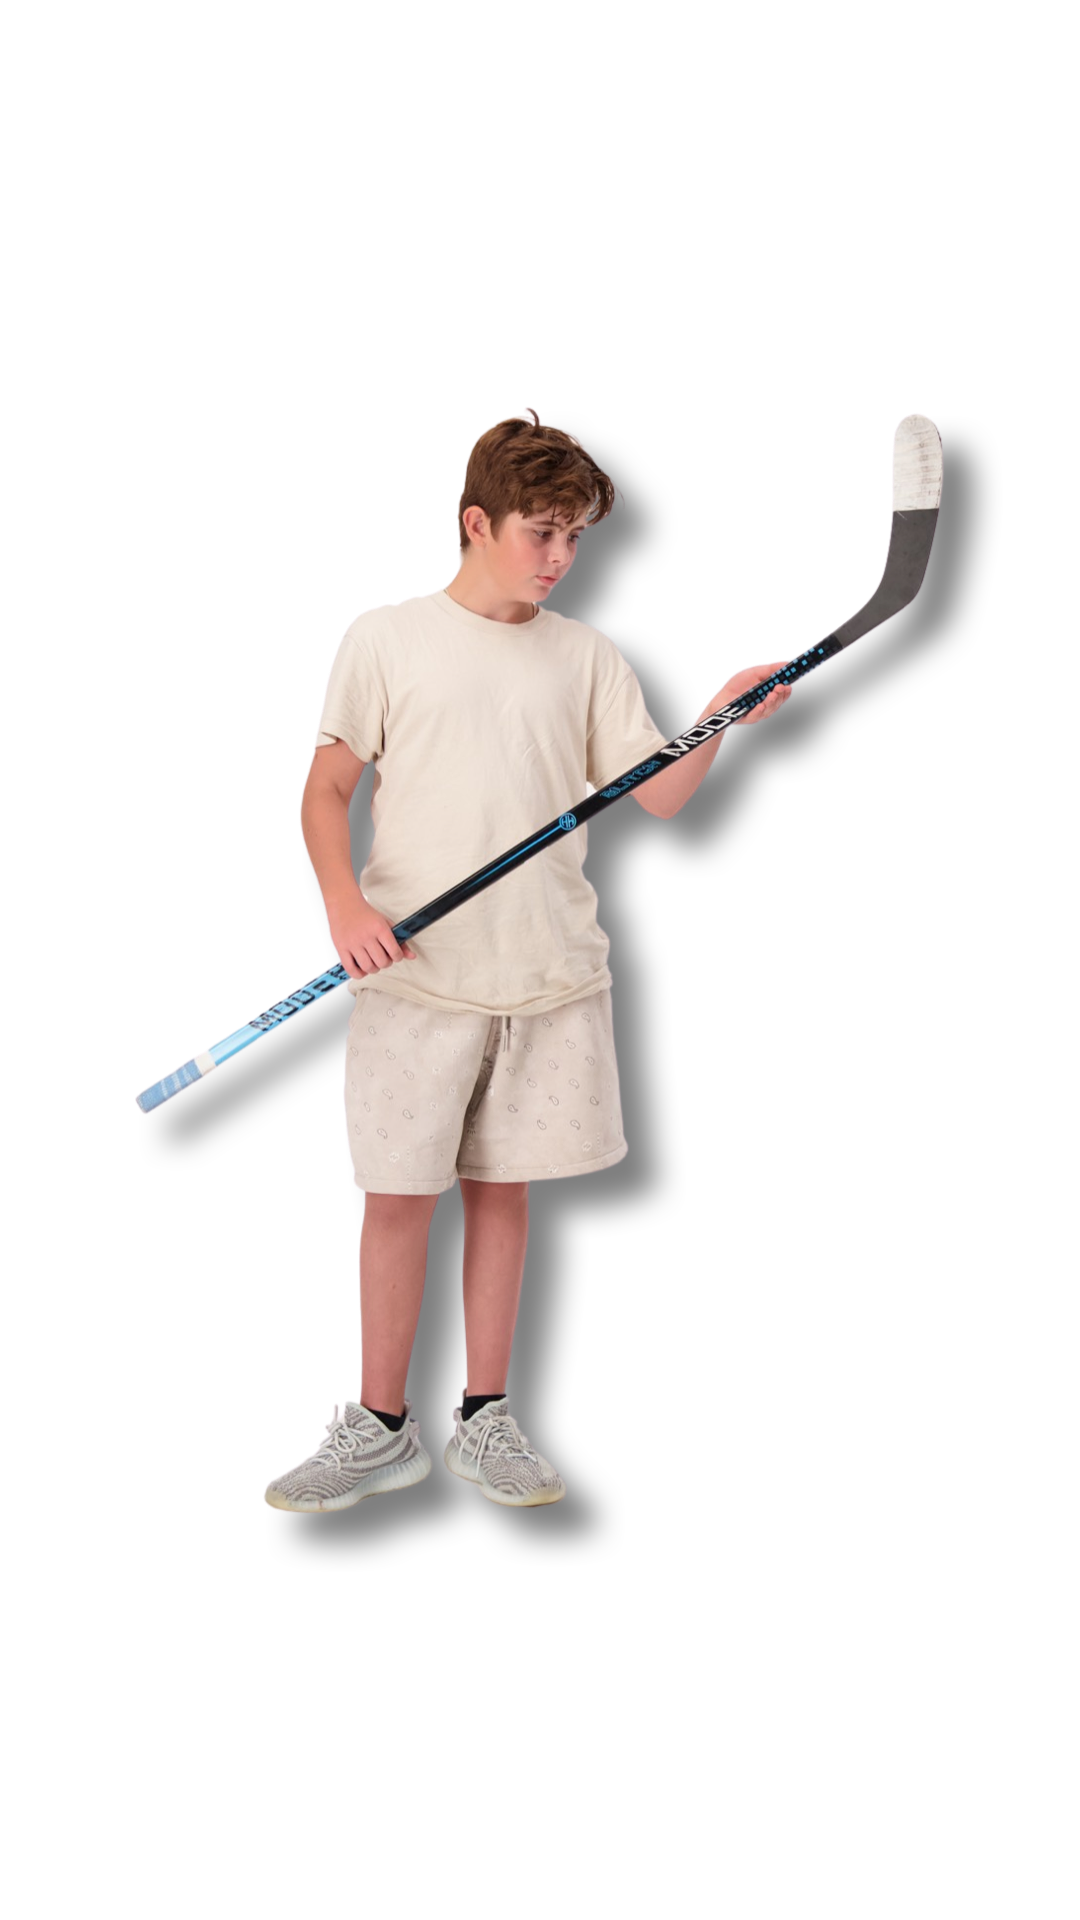 Pro quality junior hockey sticks for kids